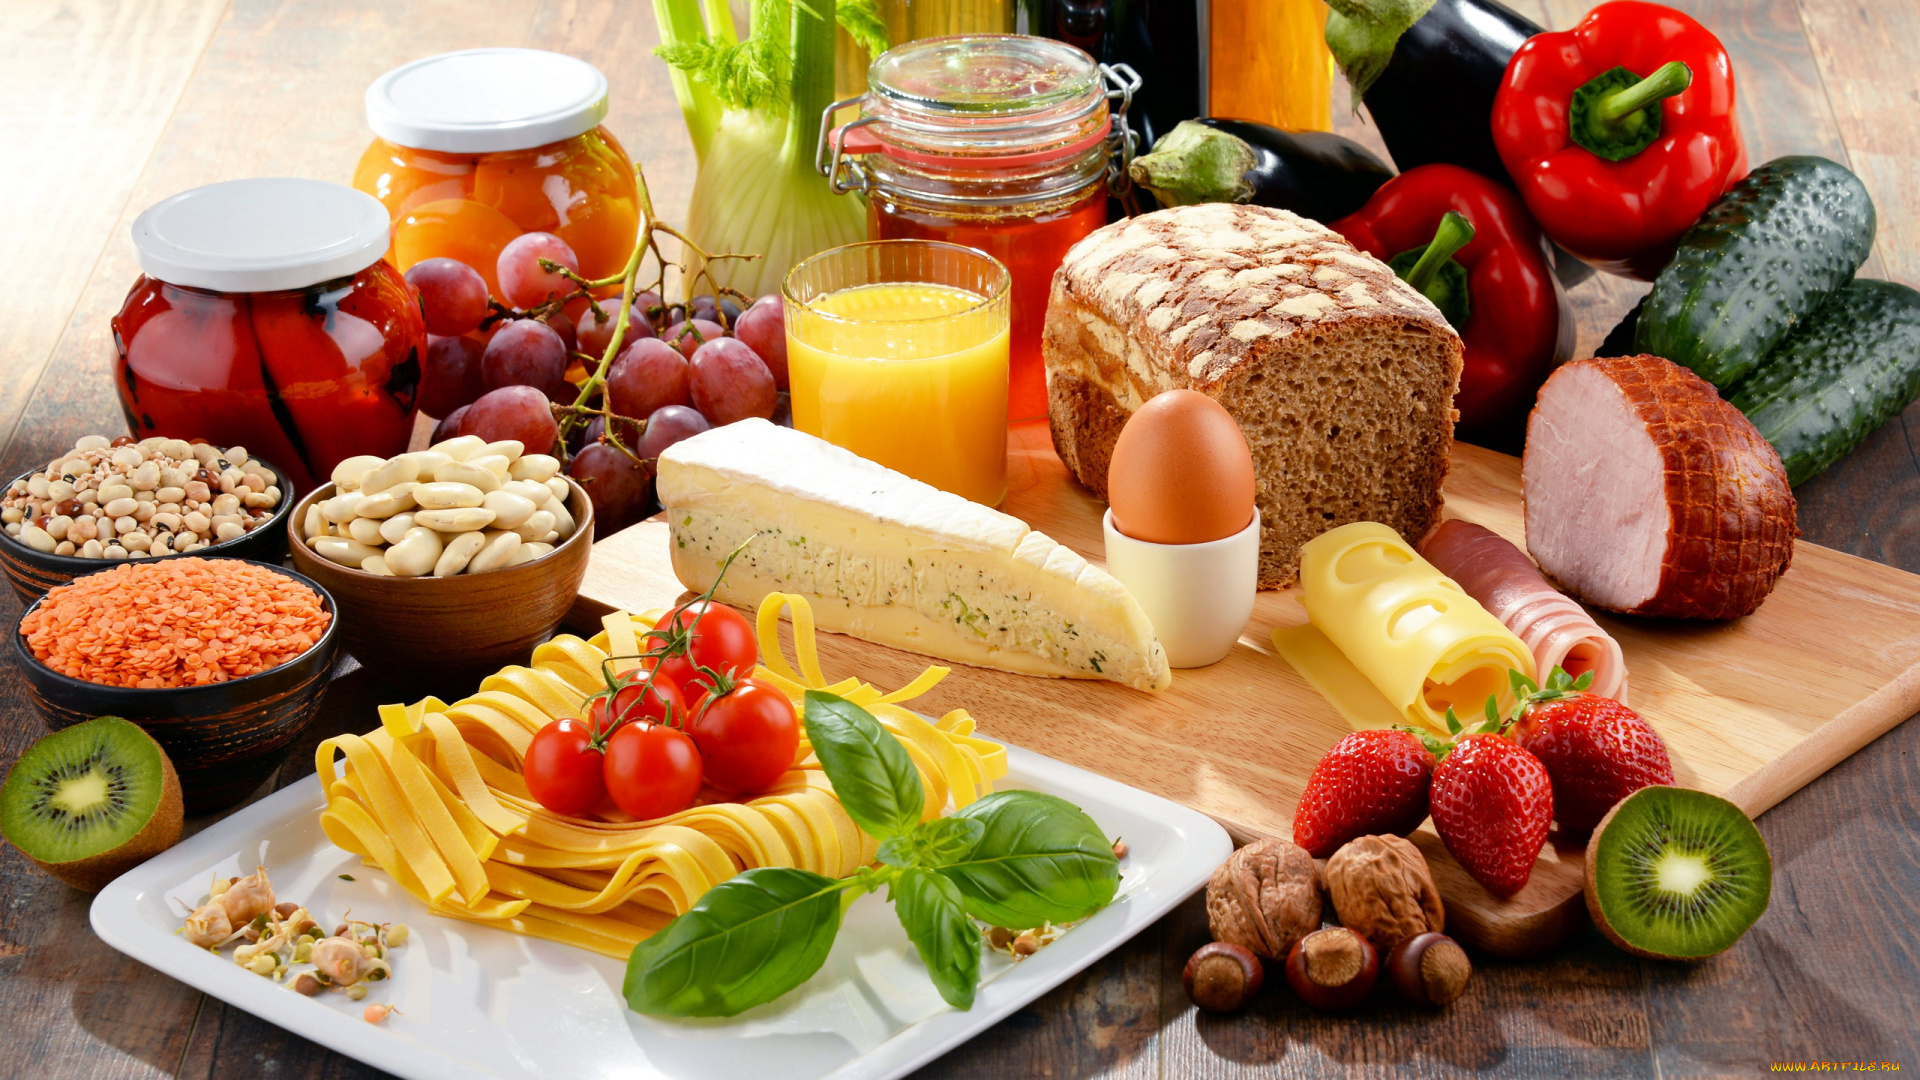 еда, разное, макароны, хлеб, фасоль, ягоды, фрукты, овощи, яйца, консервация, огурцы, перец, томаты, помидоры